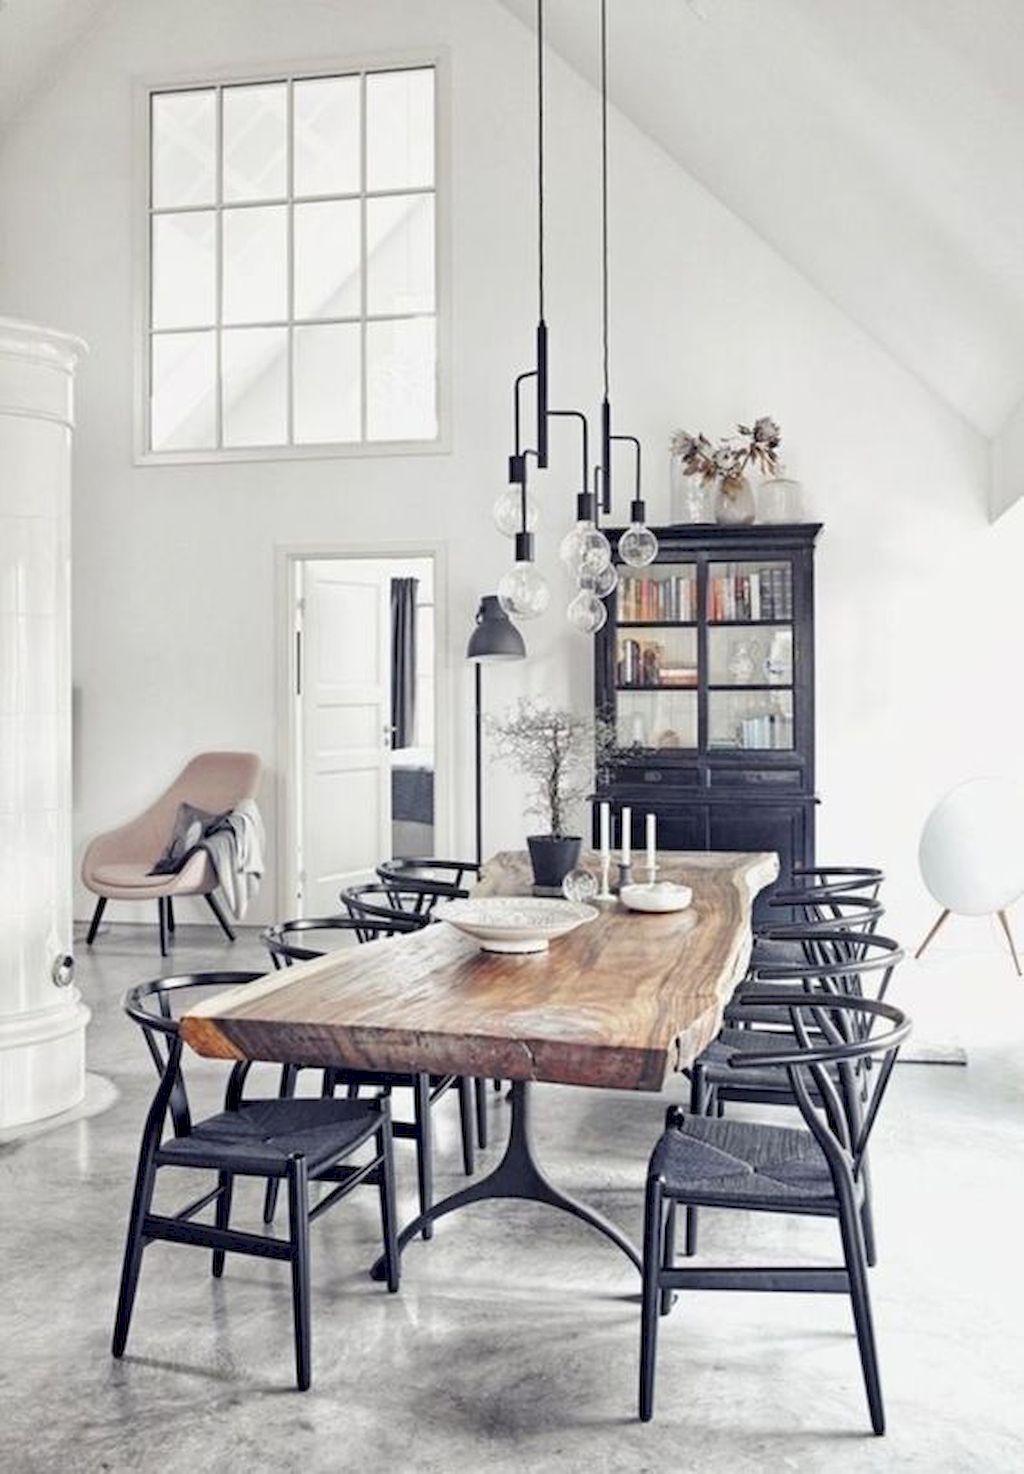 55 awesome modern farmhouse dining room design ideas.jpg